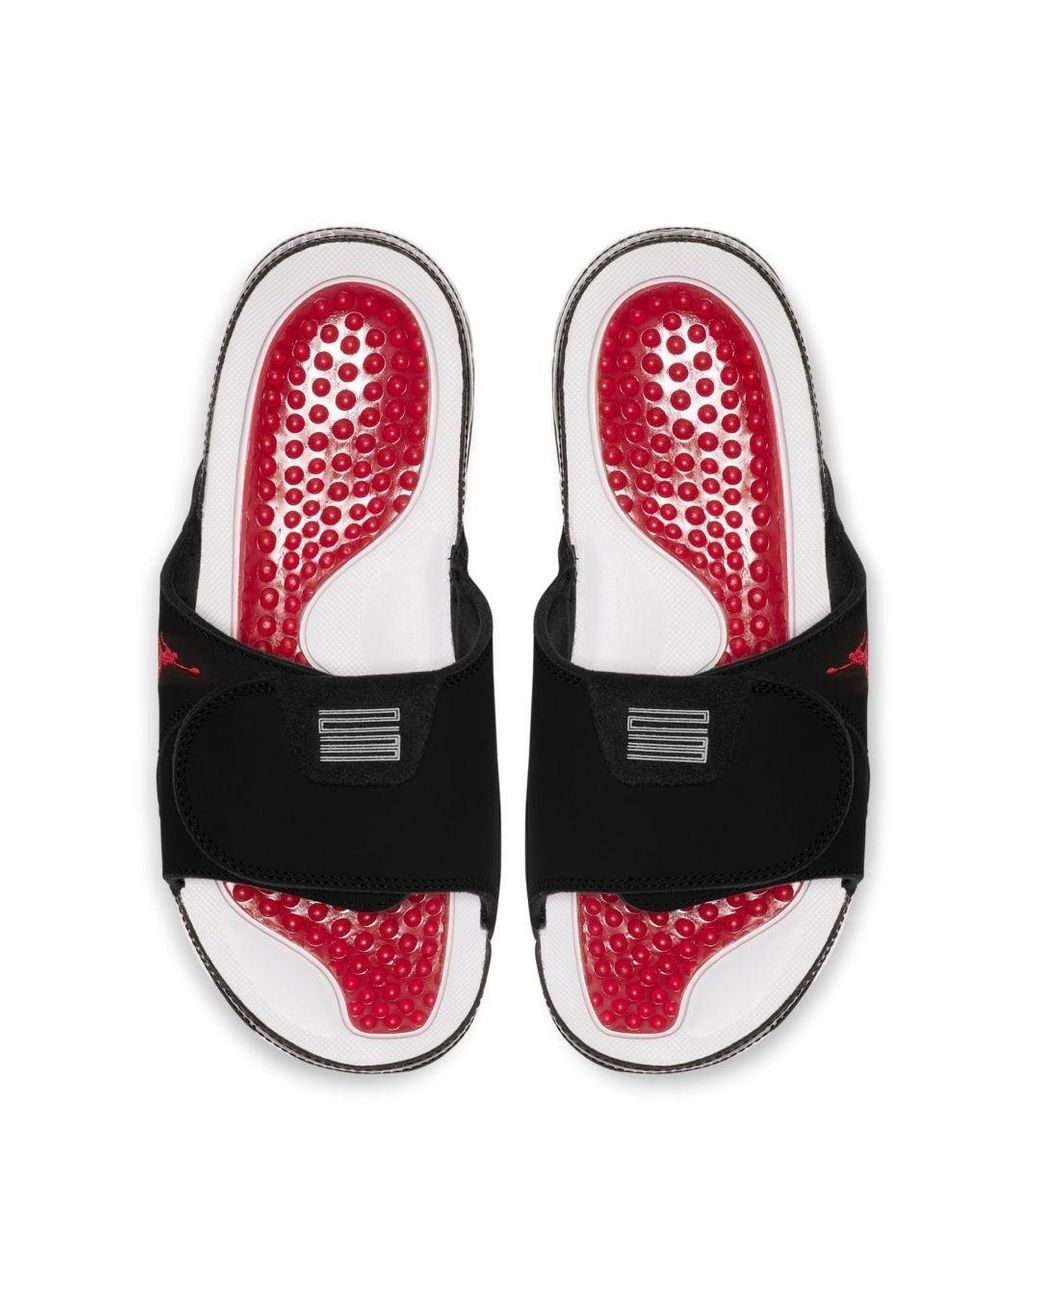 Nike Jordan Hydro Xi Retro Slide in 